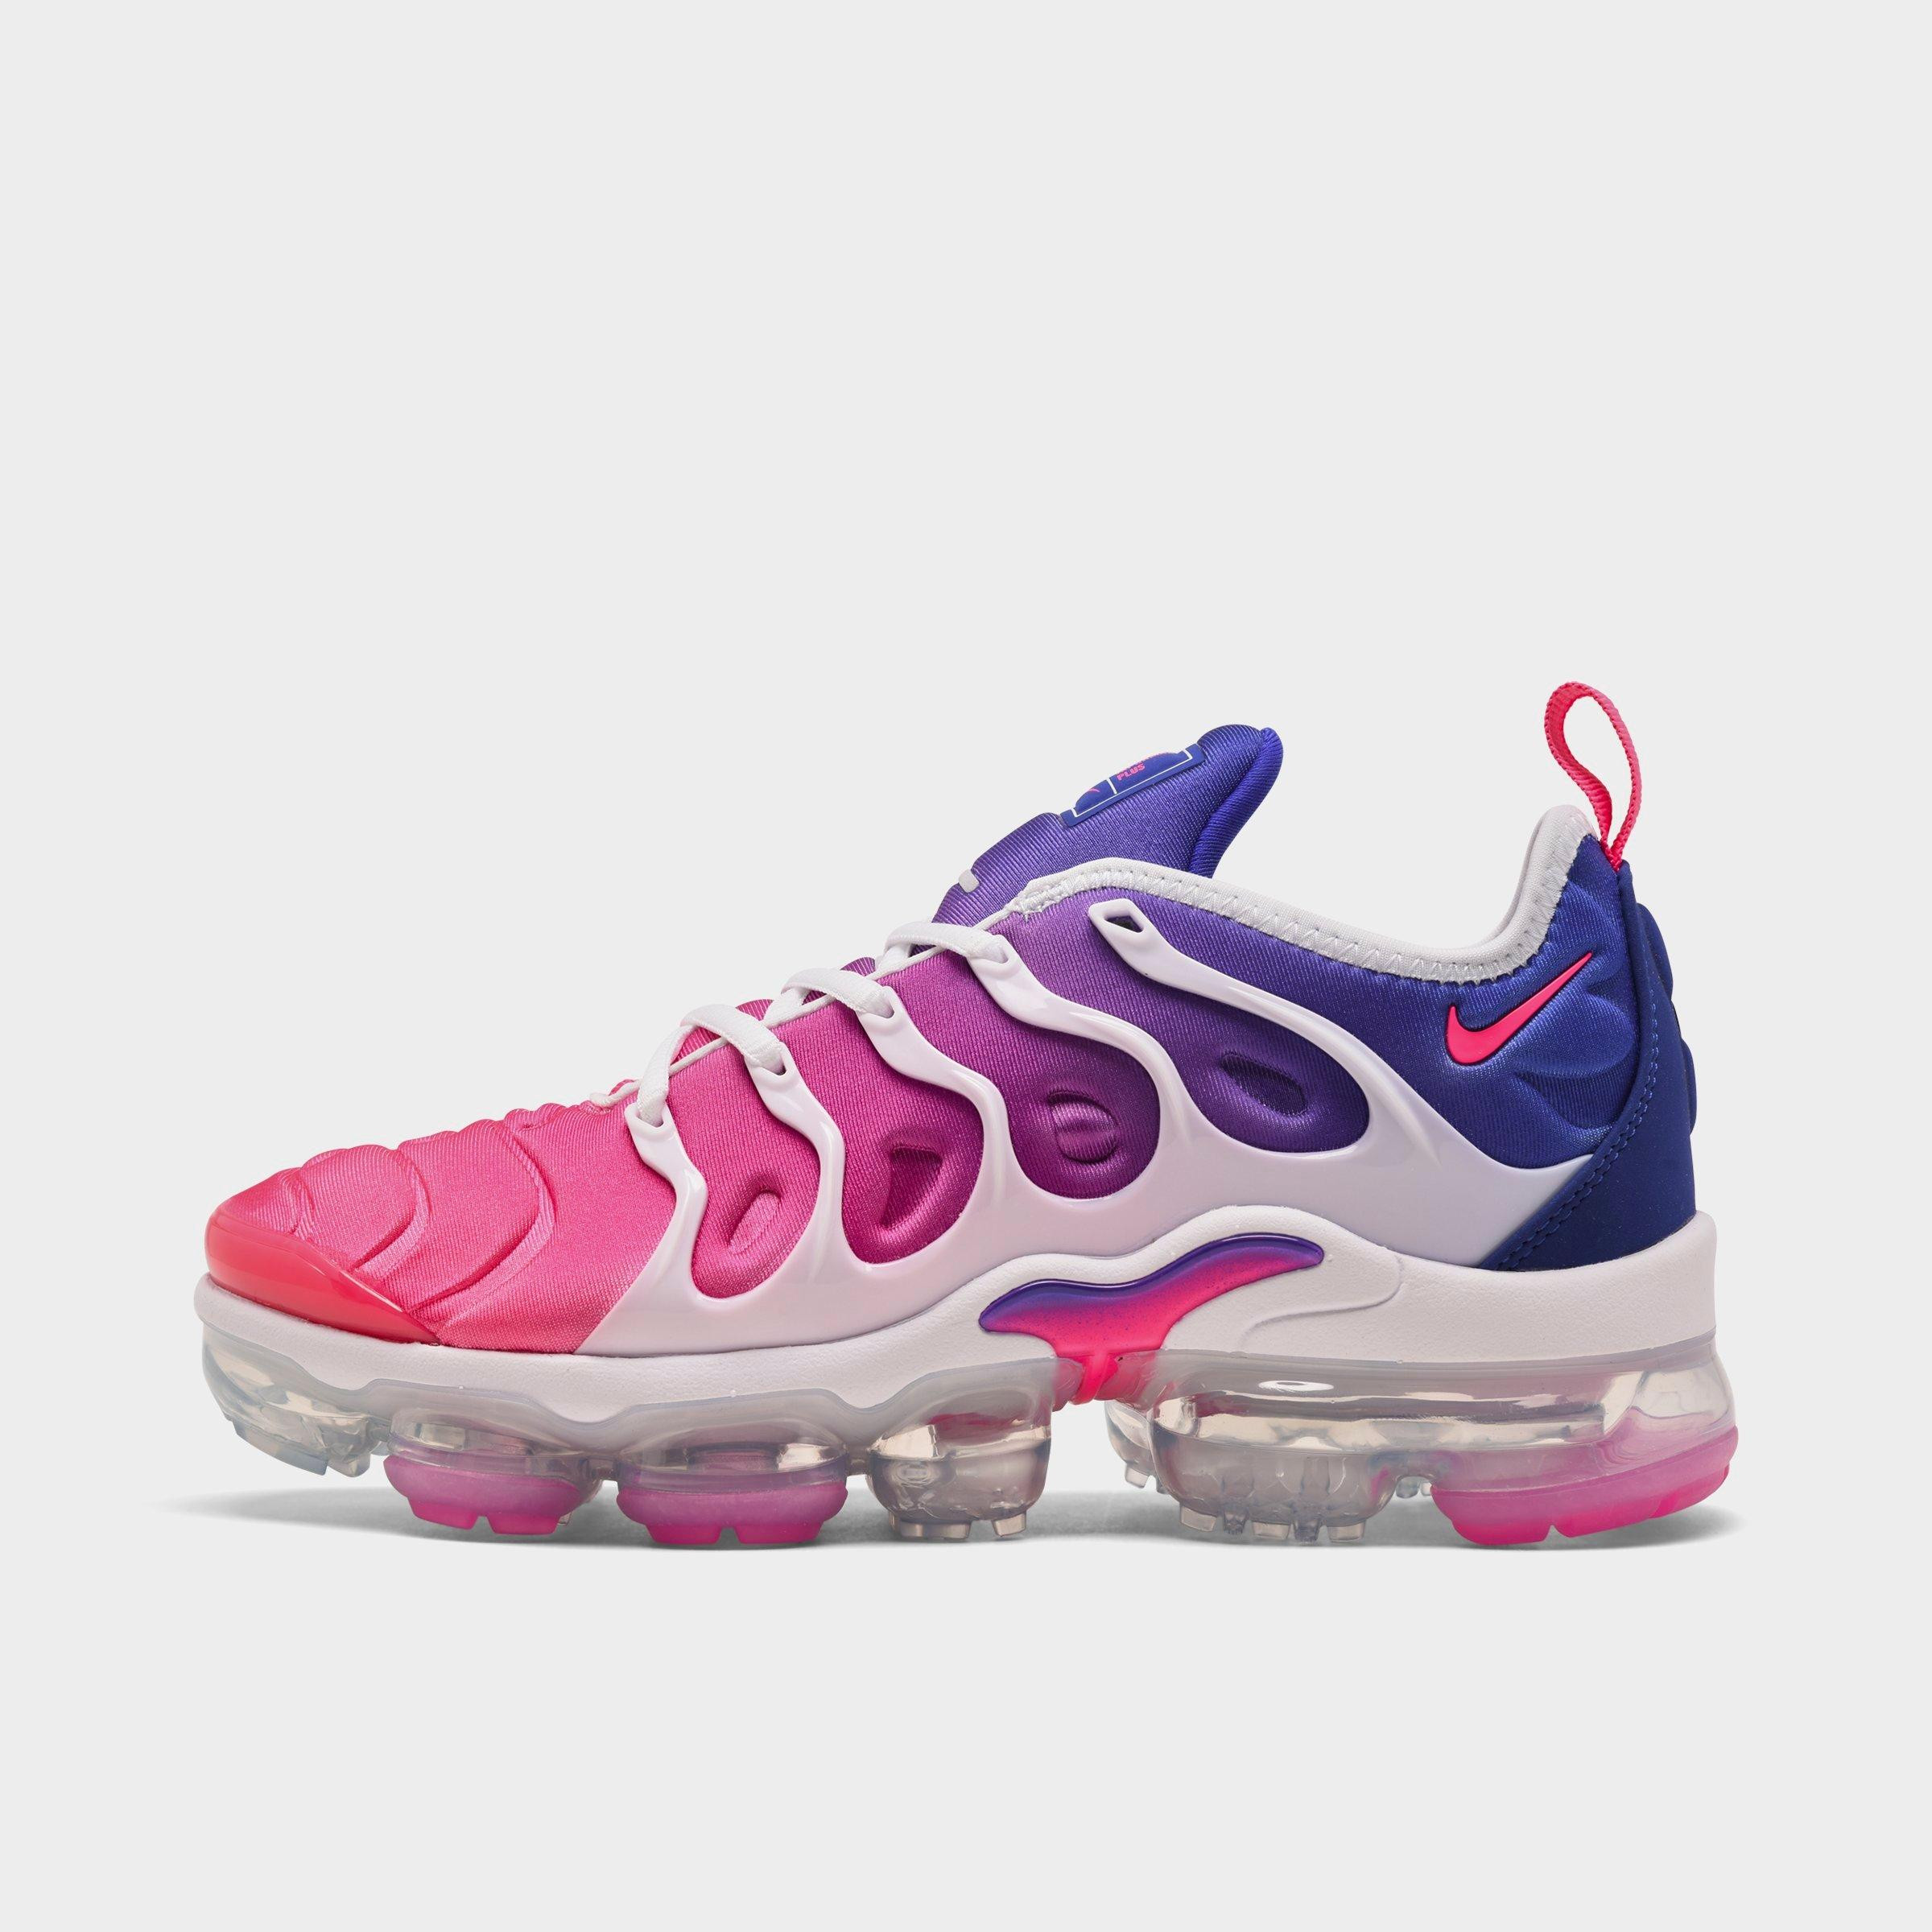 Women's Nike Air Vapormax Plus SE Running Shoes